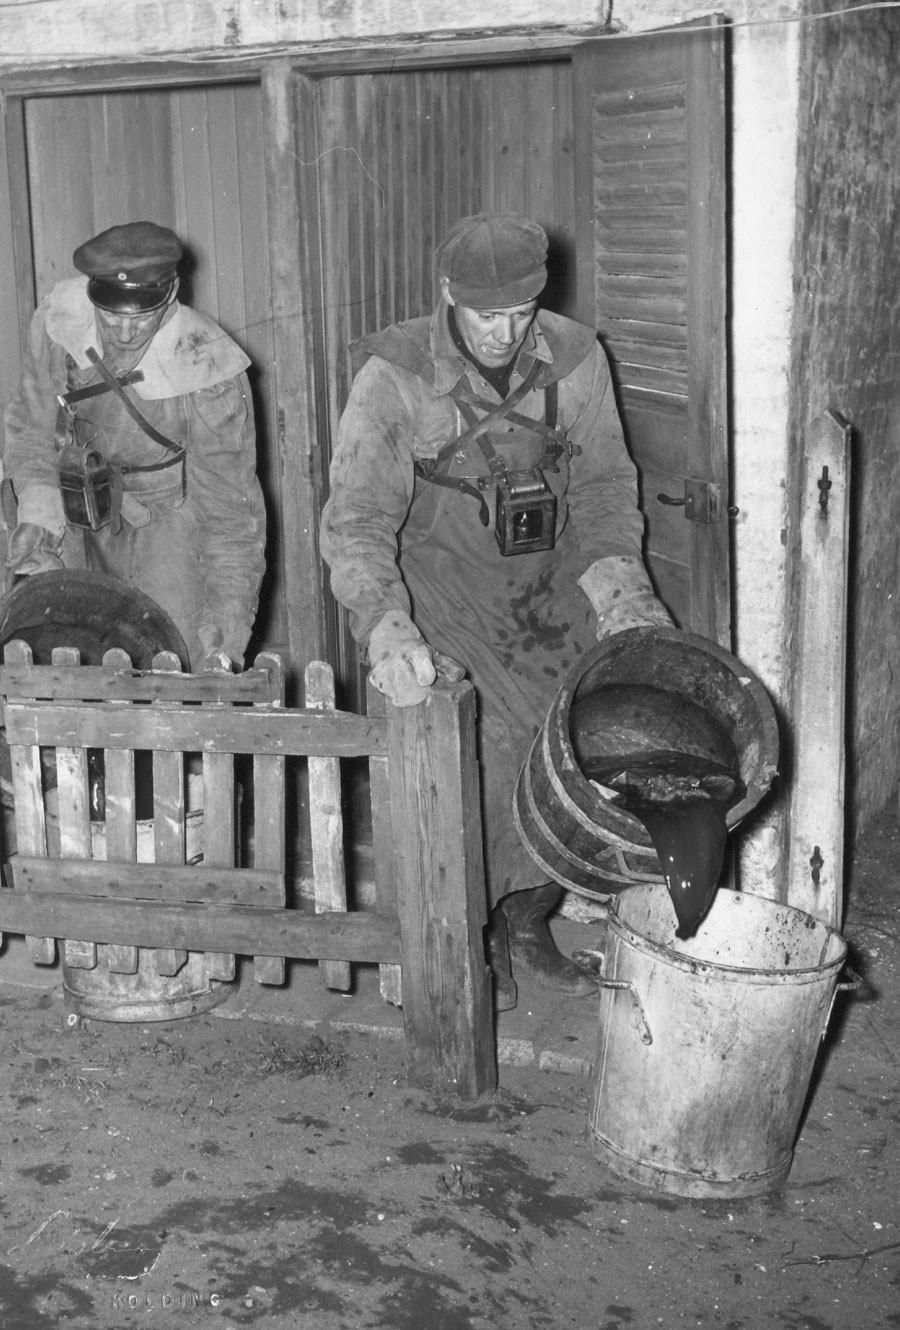 Natrenovation – latrinspandene tømmes i Kolding i 1952. Foto: Kolding Stadsarkiv / Pressefotograf N. Lisberg